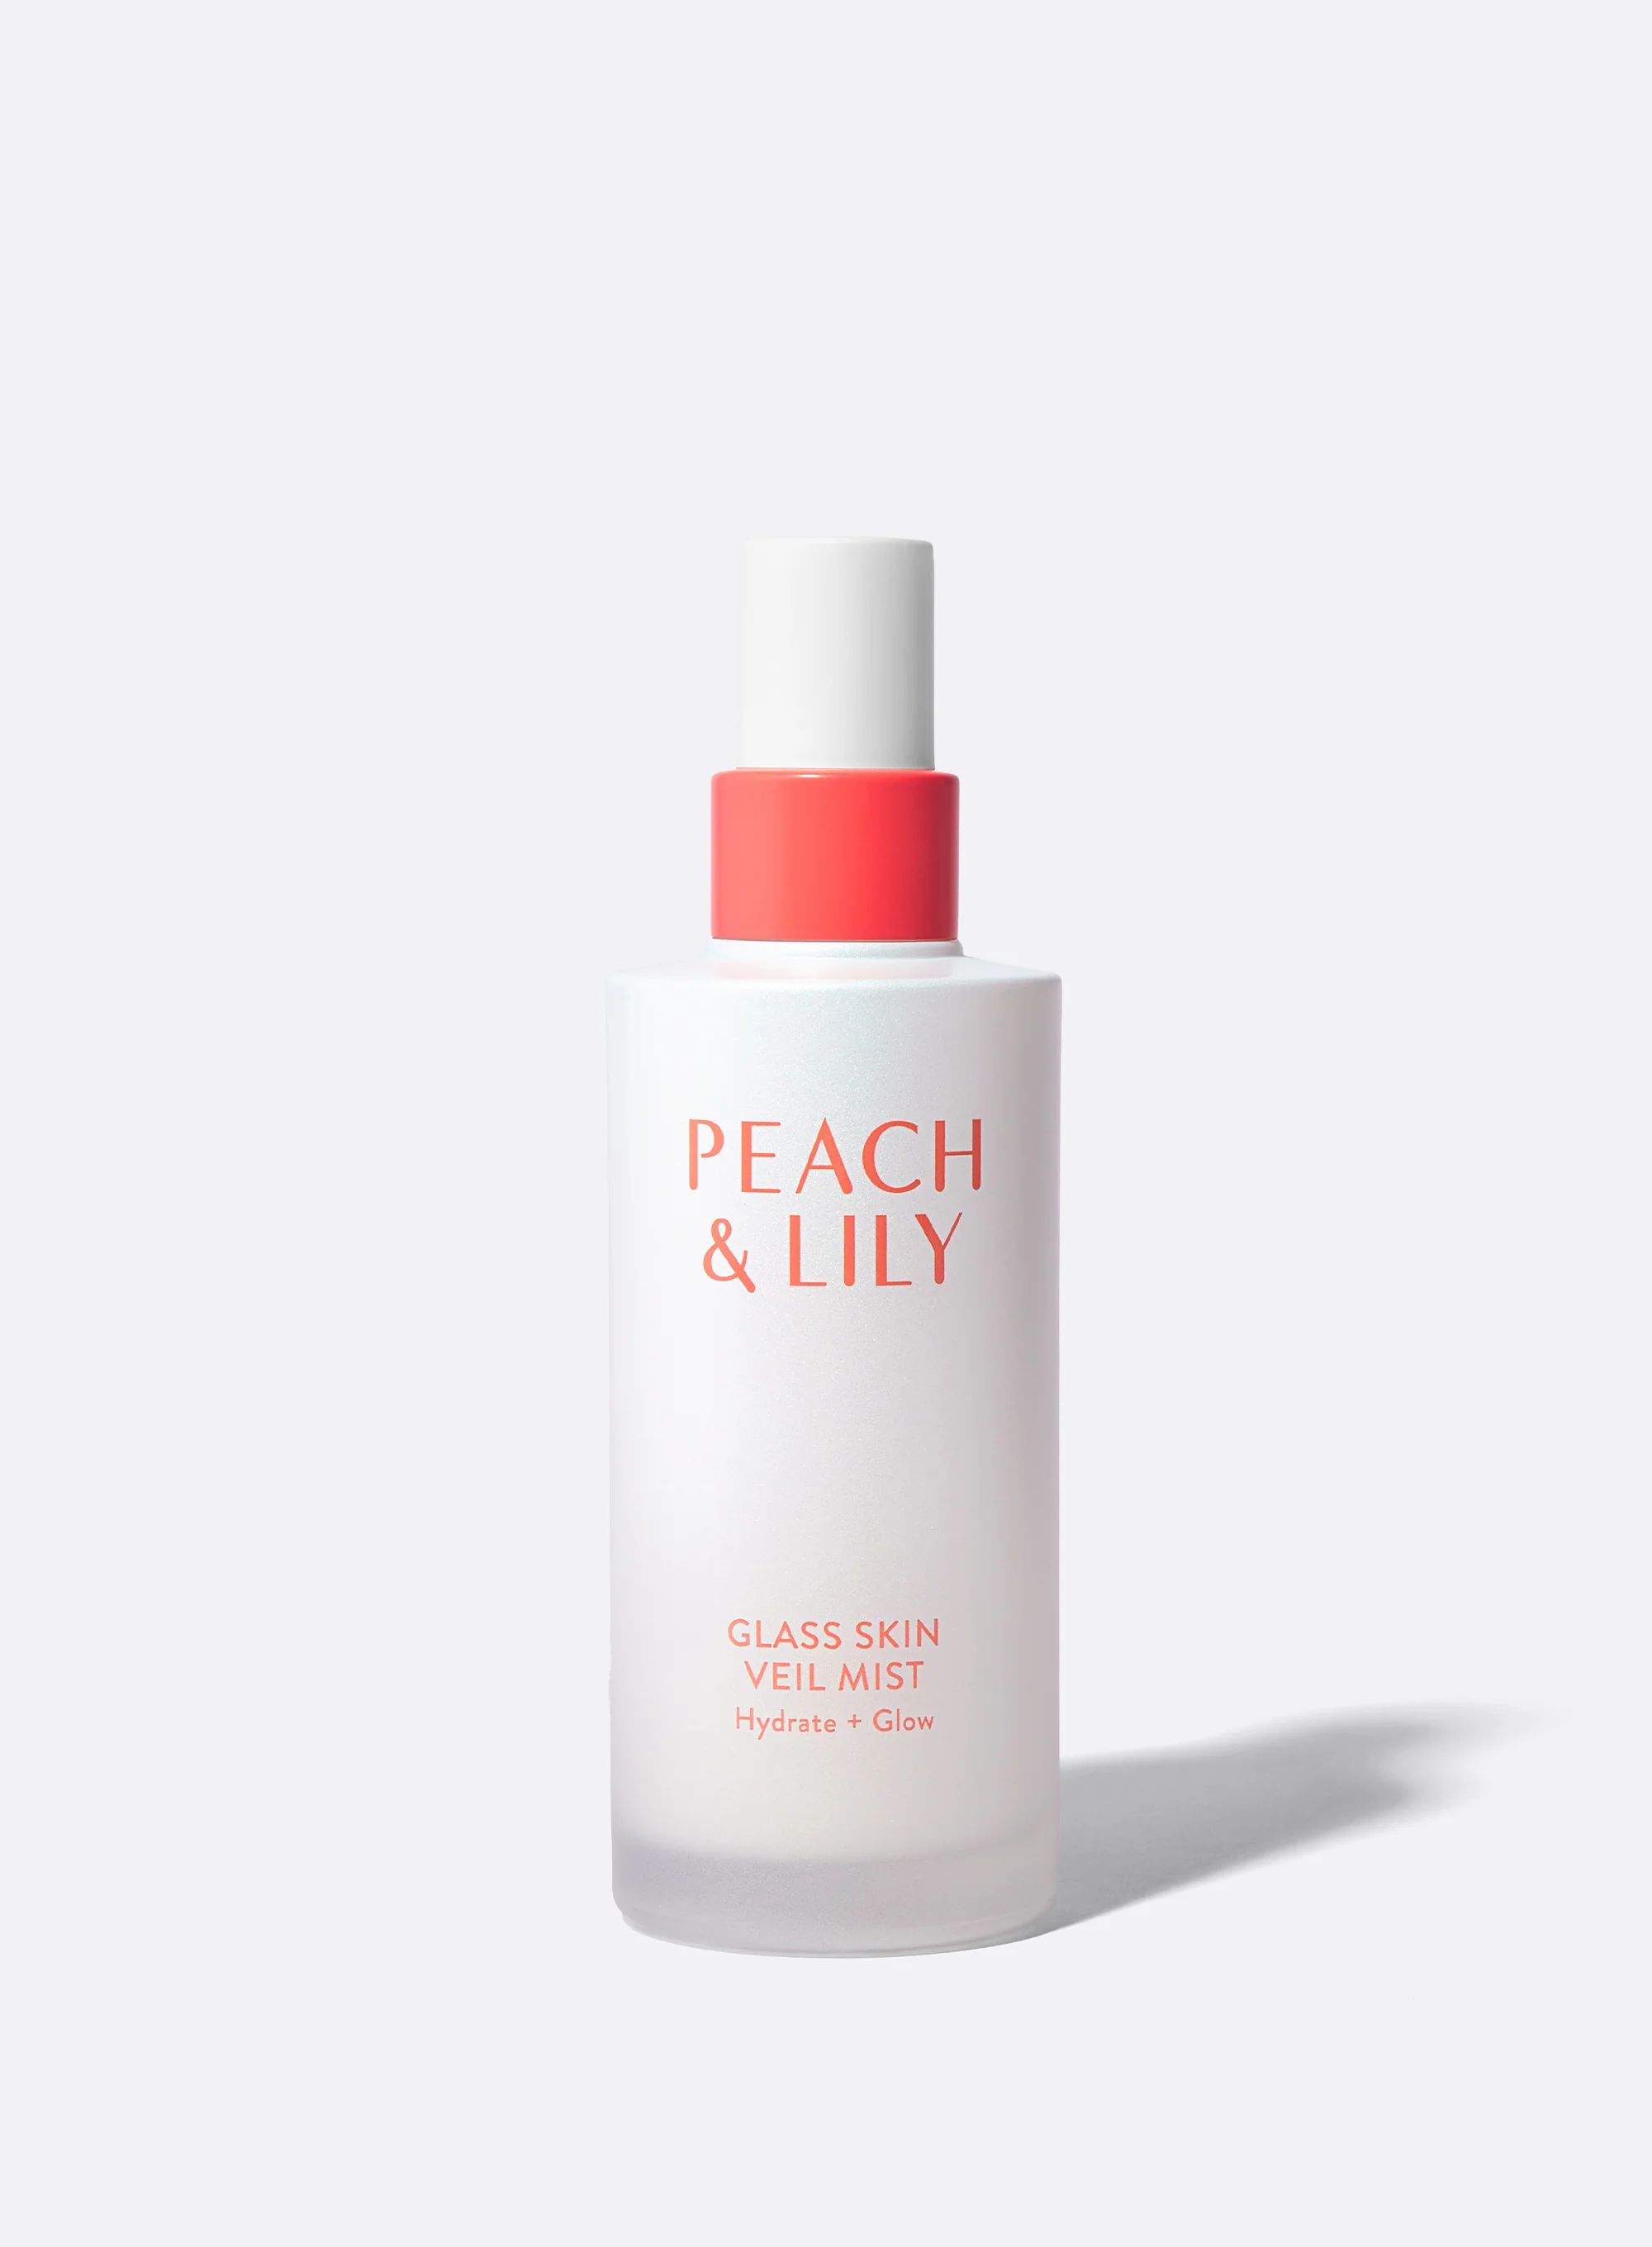 Glass Skin Veil Mist | Peach and Lily, Inc.